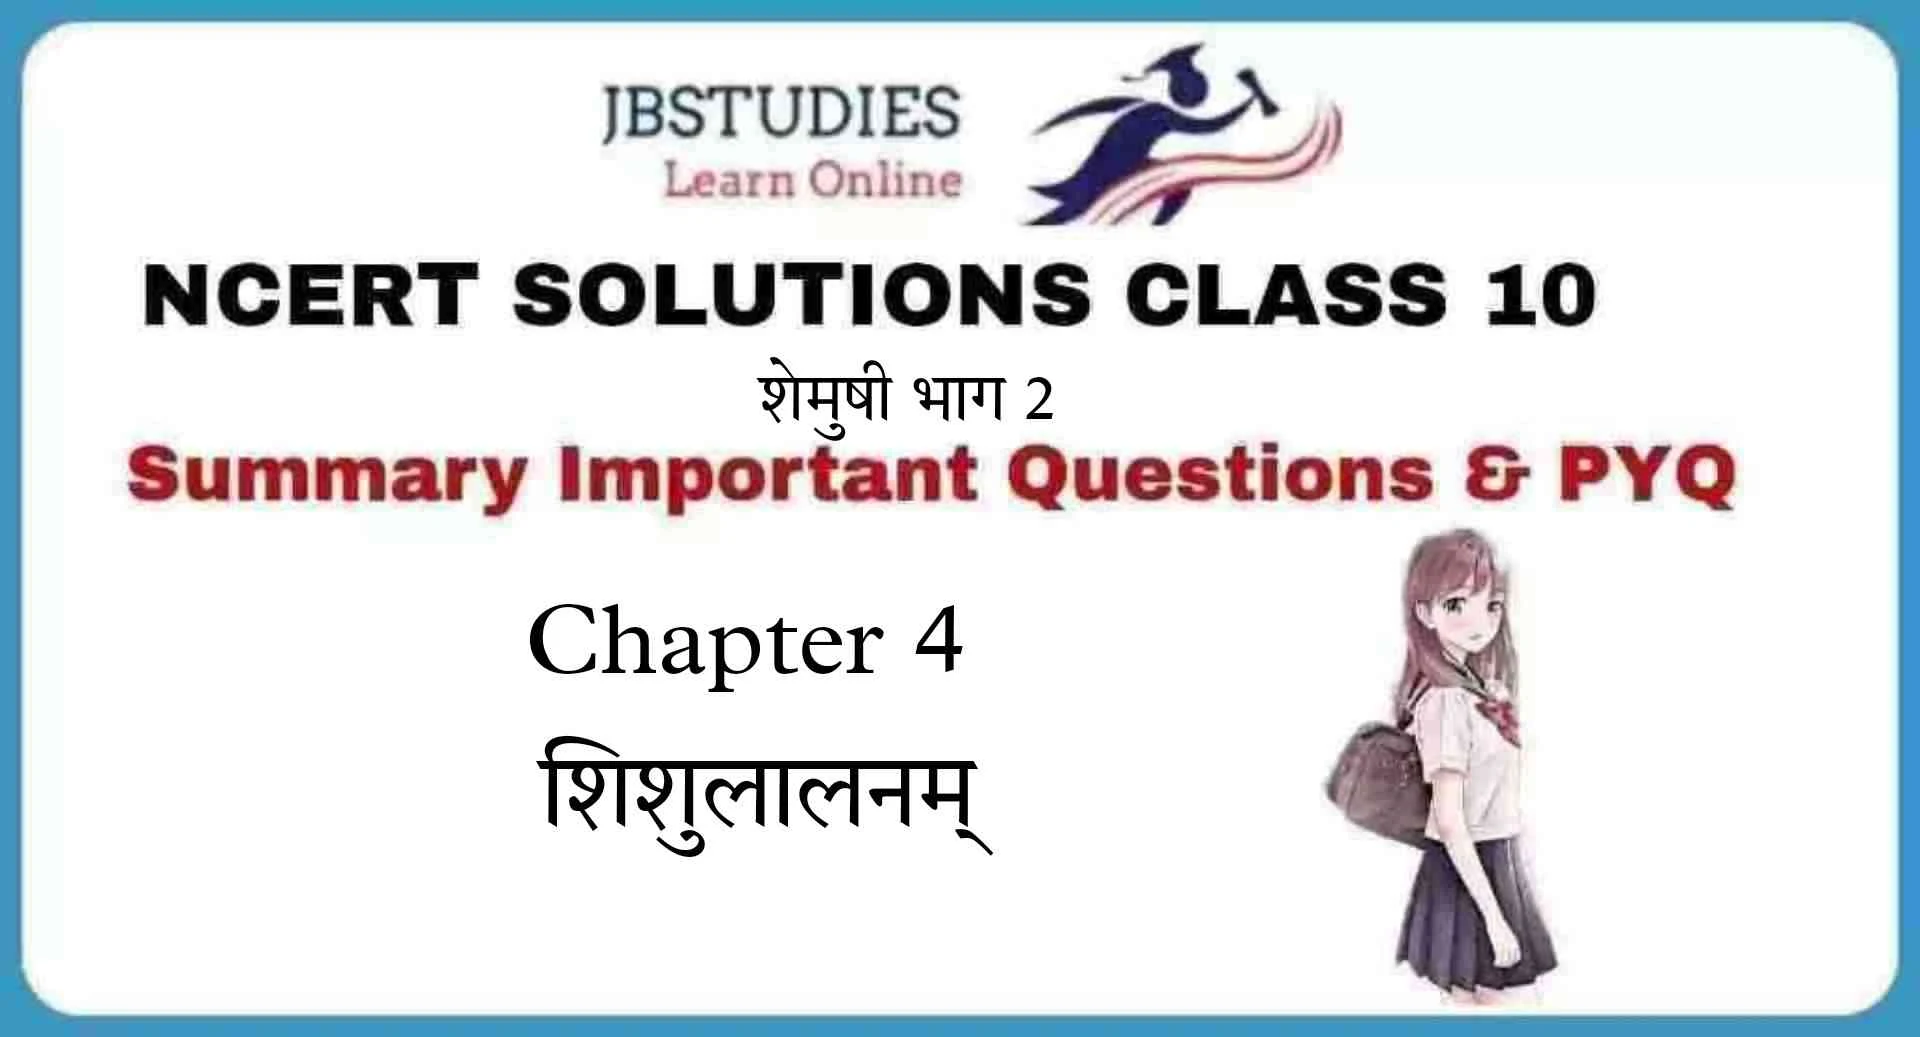 Solutions Class 10 शेमुषी भाग 2 Chapter-4 (शिशुलालनम्)